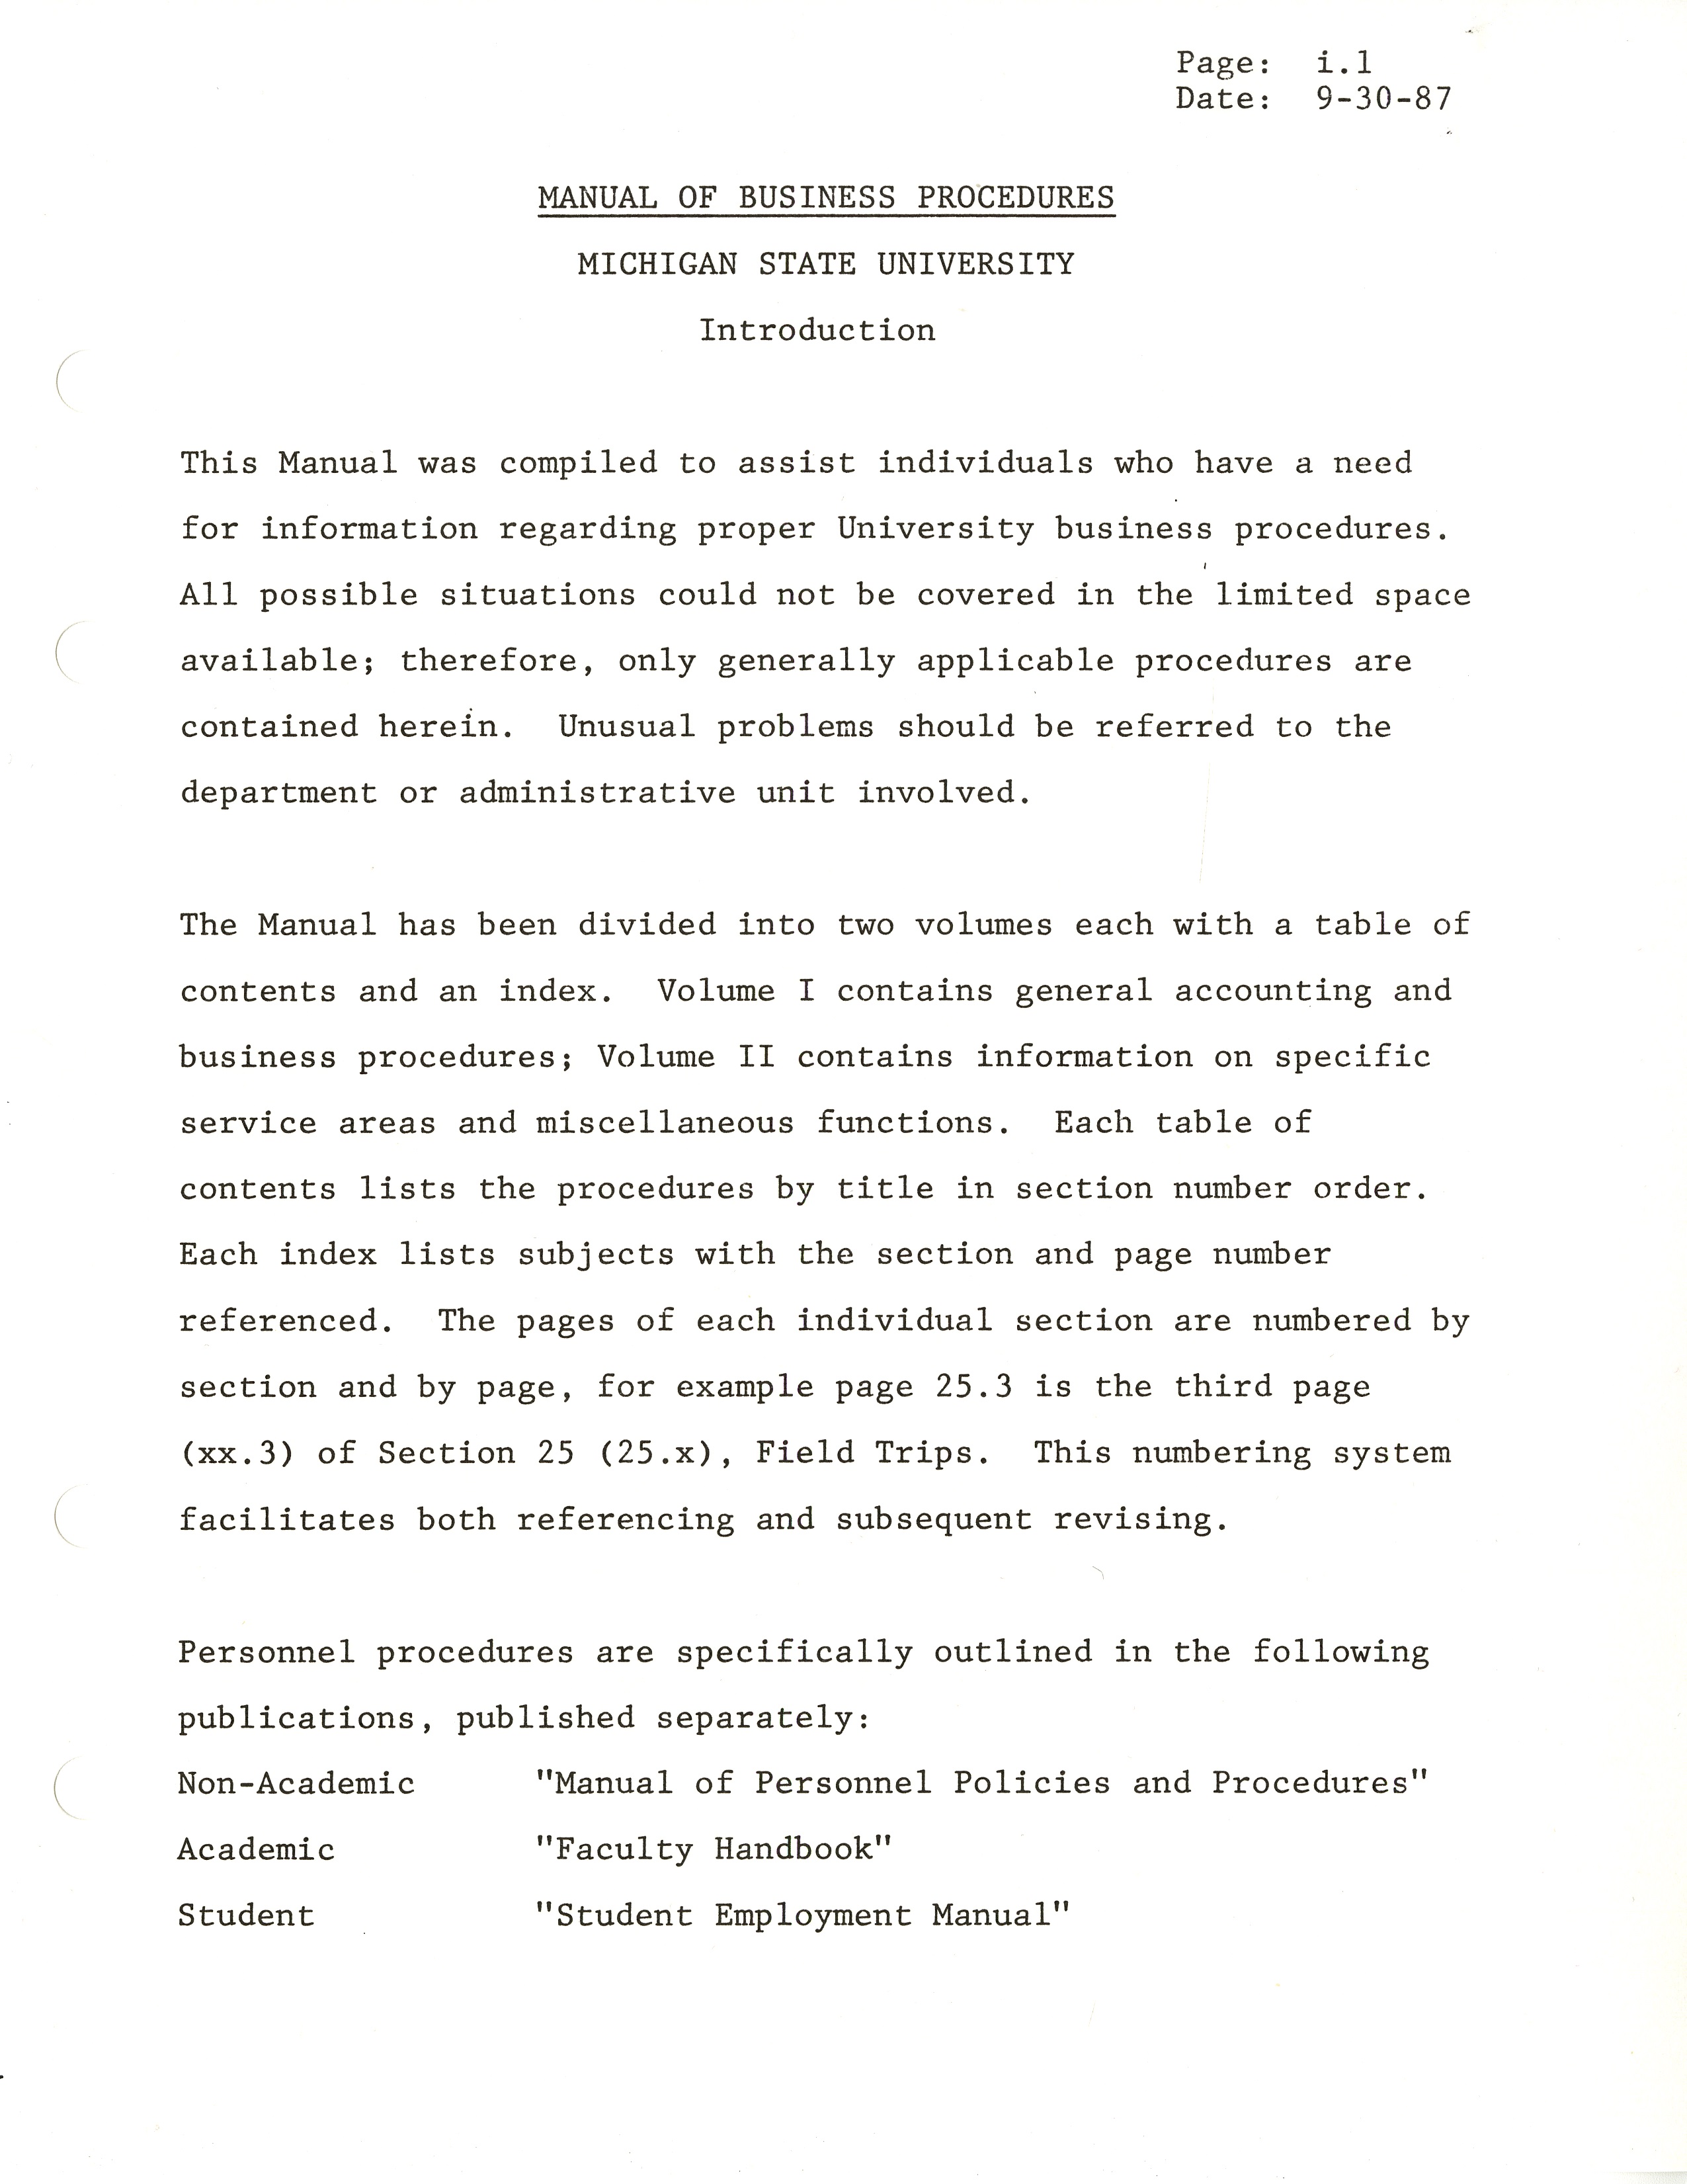 MSU Manual of Business Procedures, 1988